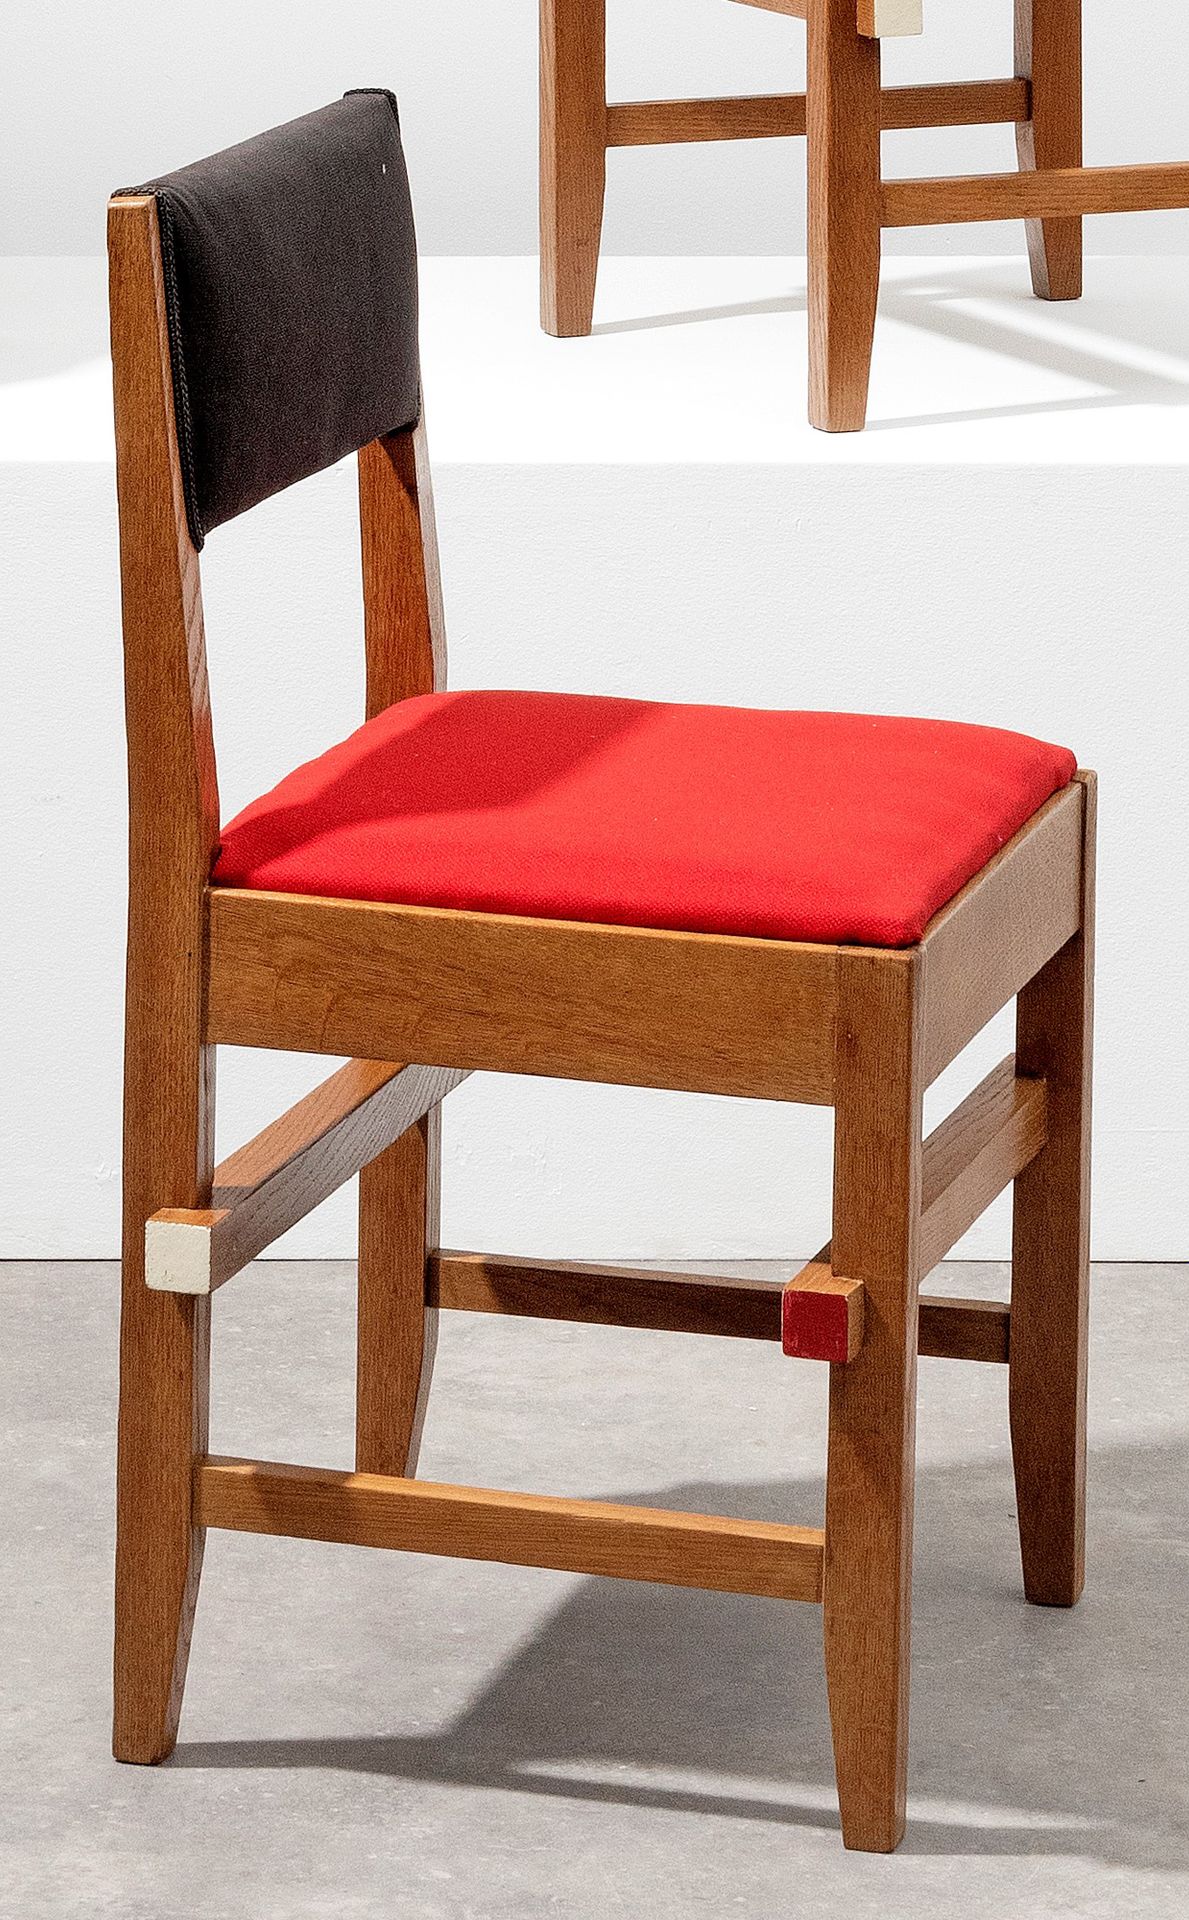 HUIB HOSTE (1881-1957) Stapelmeubelen
椅子
橡木。多色的横截面。
在目前的内饰下有原始的赭色内饰。
斯托尔。
Eik.Po&hellip;